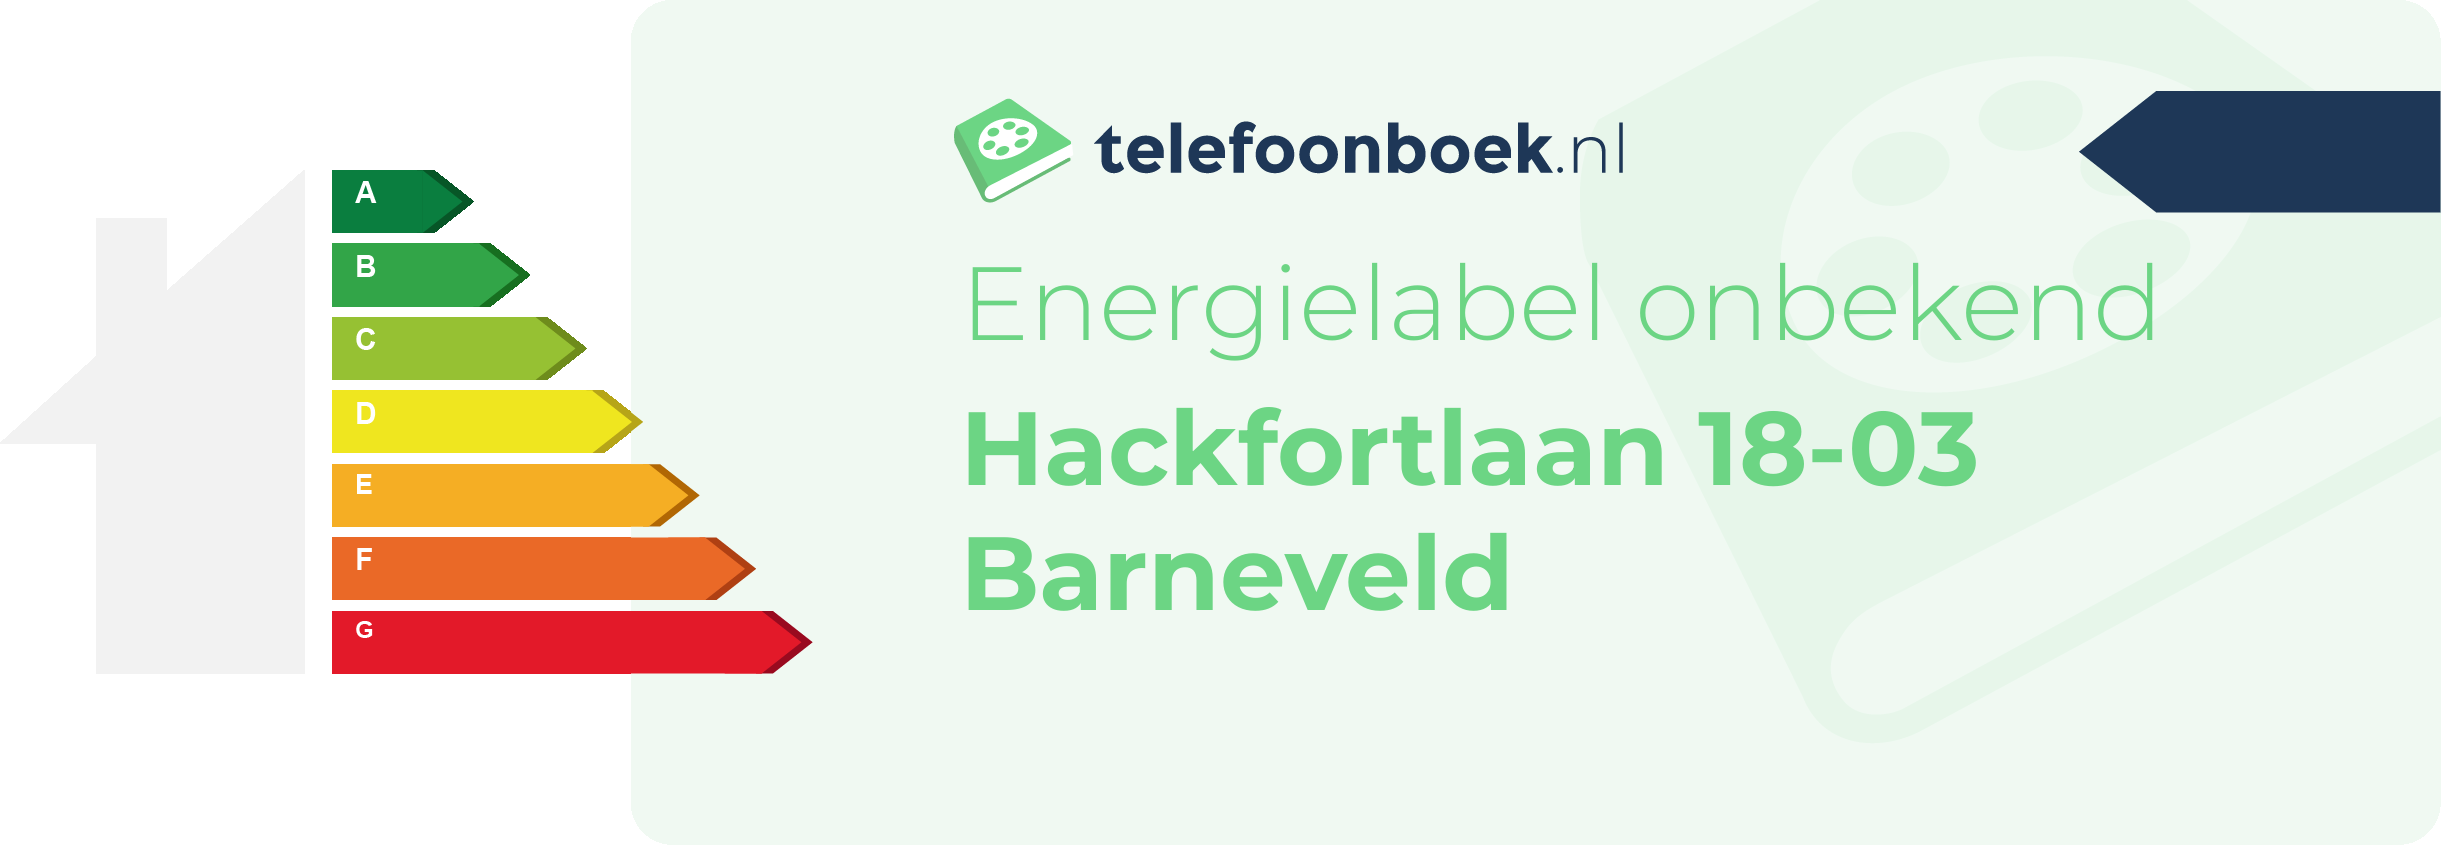 Energielabel Hackfortlaan 18-03 Barneveld